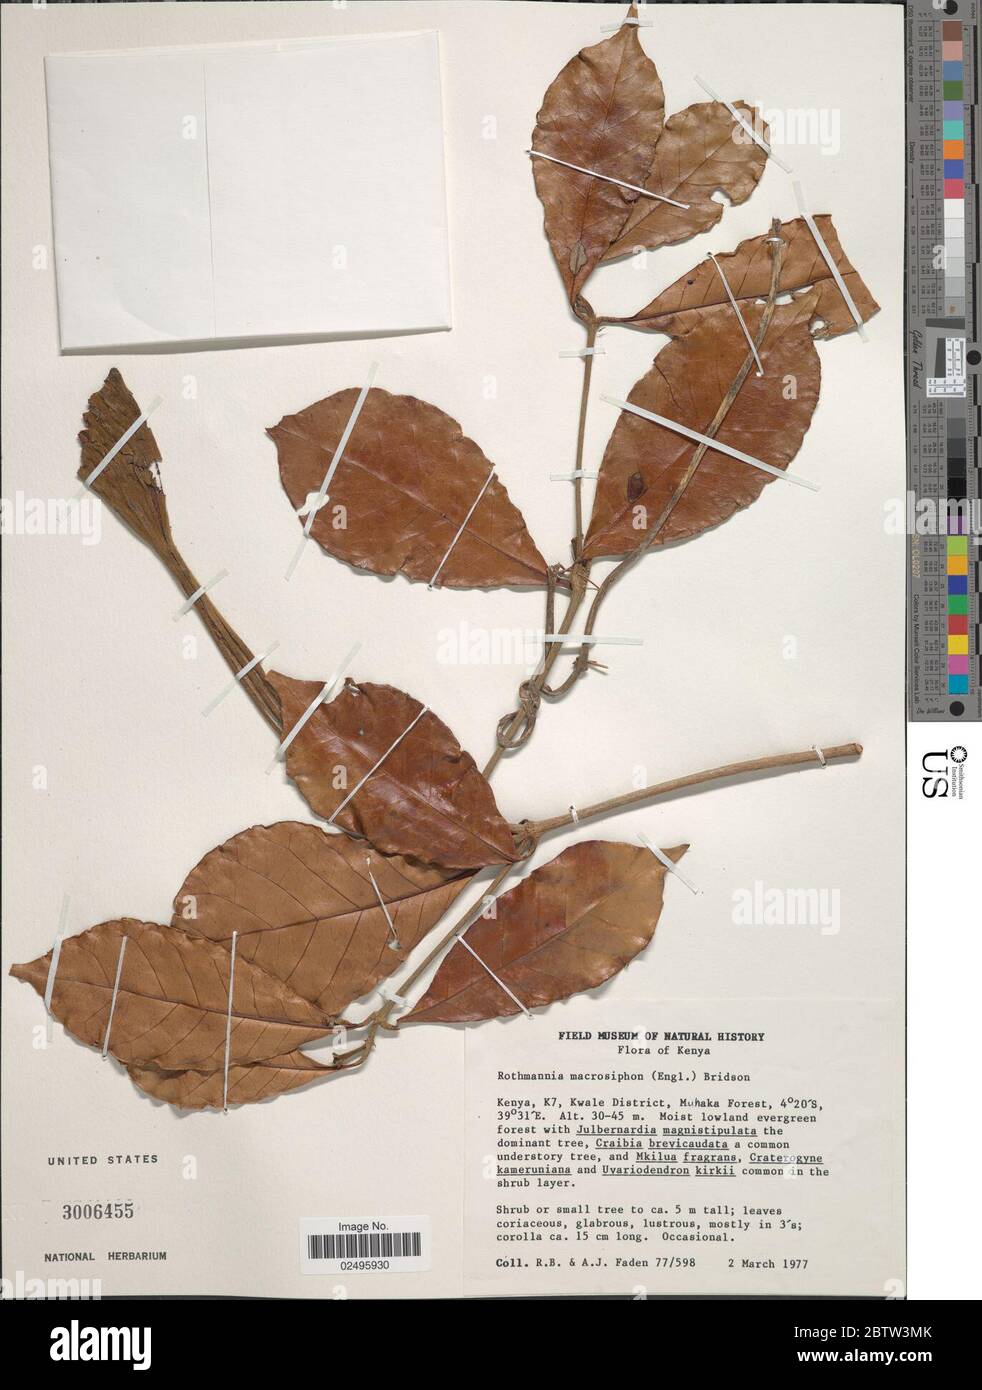 Rothmannia macrosiphon Engl Bridson. Stock Photo